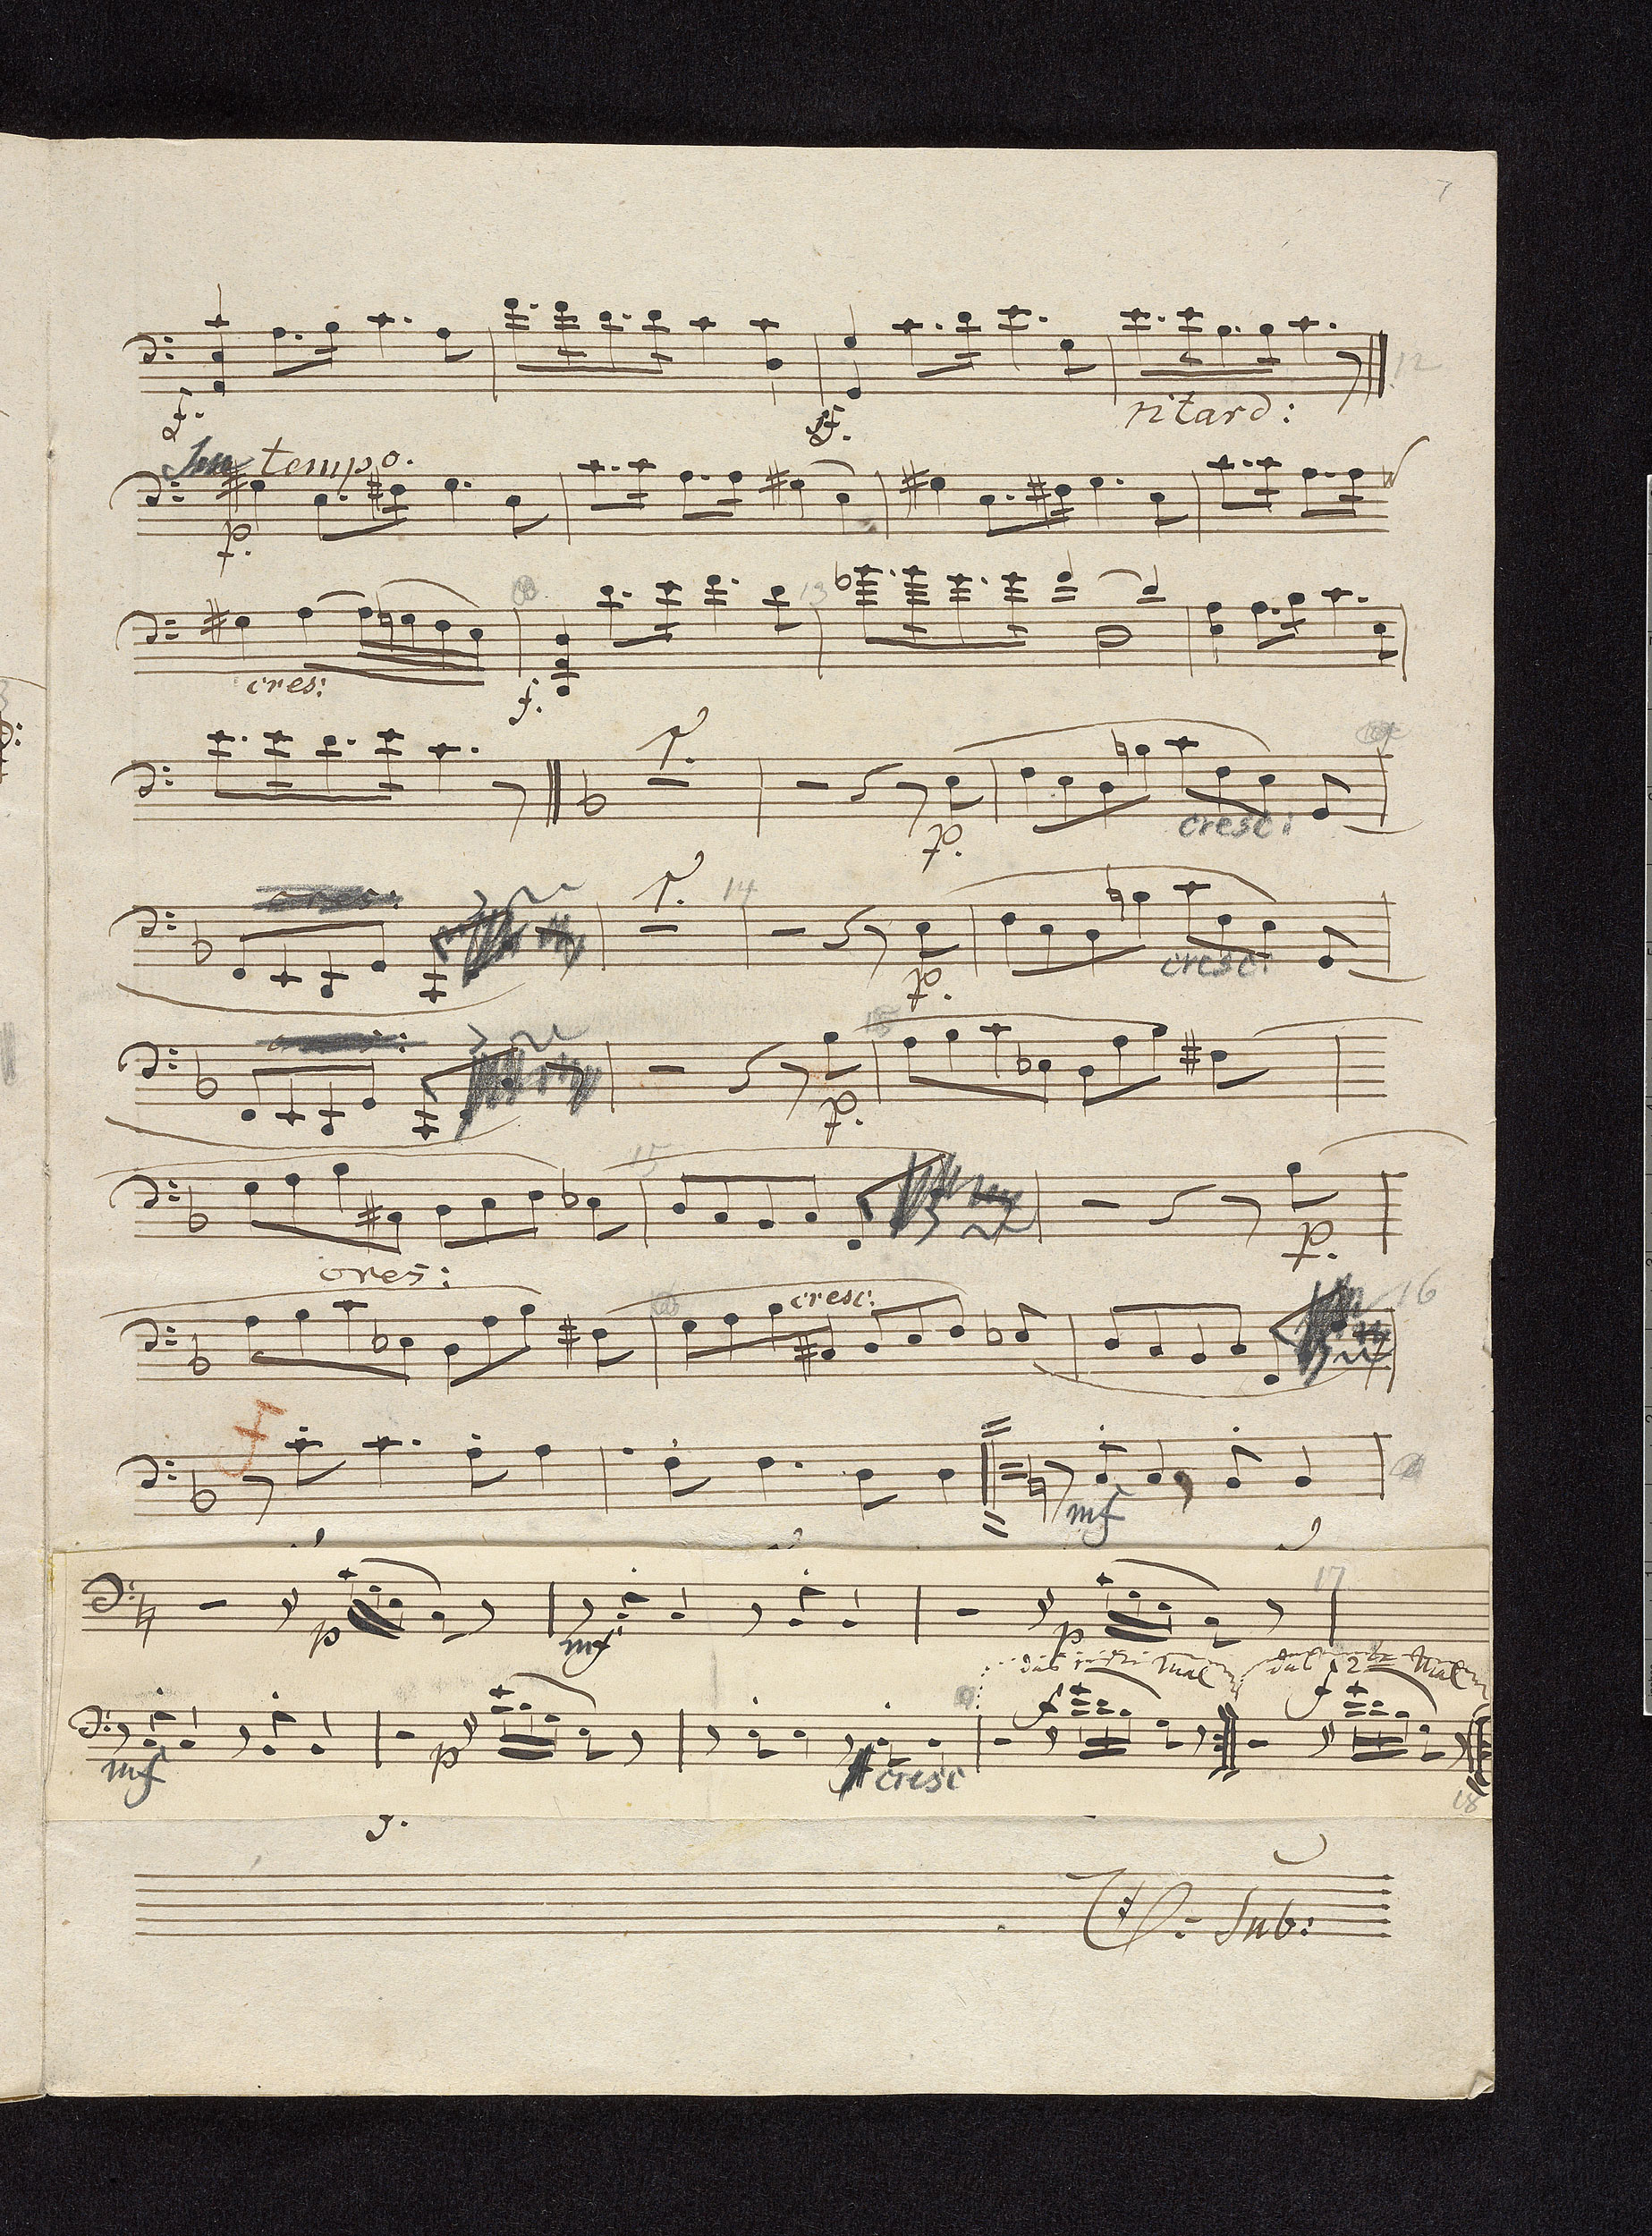 Regulation Kangaroo Ligation Schumann, Robert | Fantasiestücke, piano trio | Parts; Violoncell; V.  Finale, p. 7 | The Morgan Library & Museum